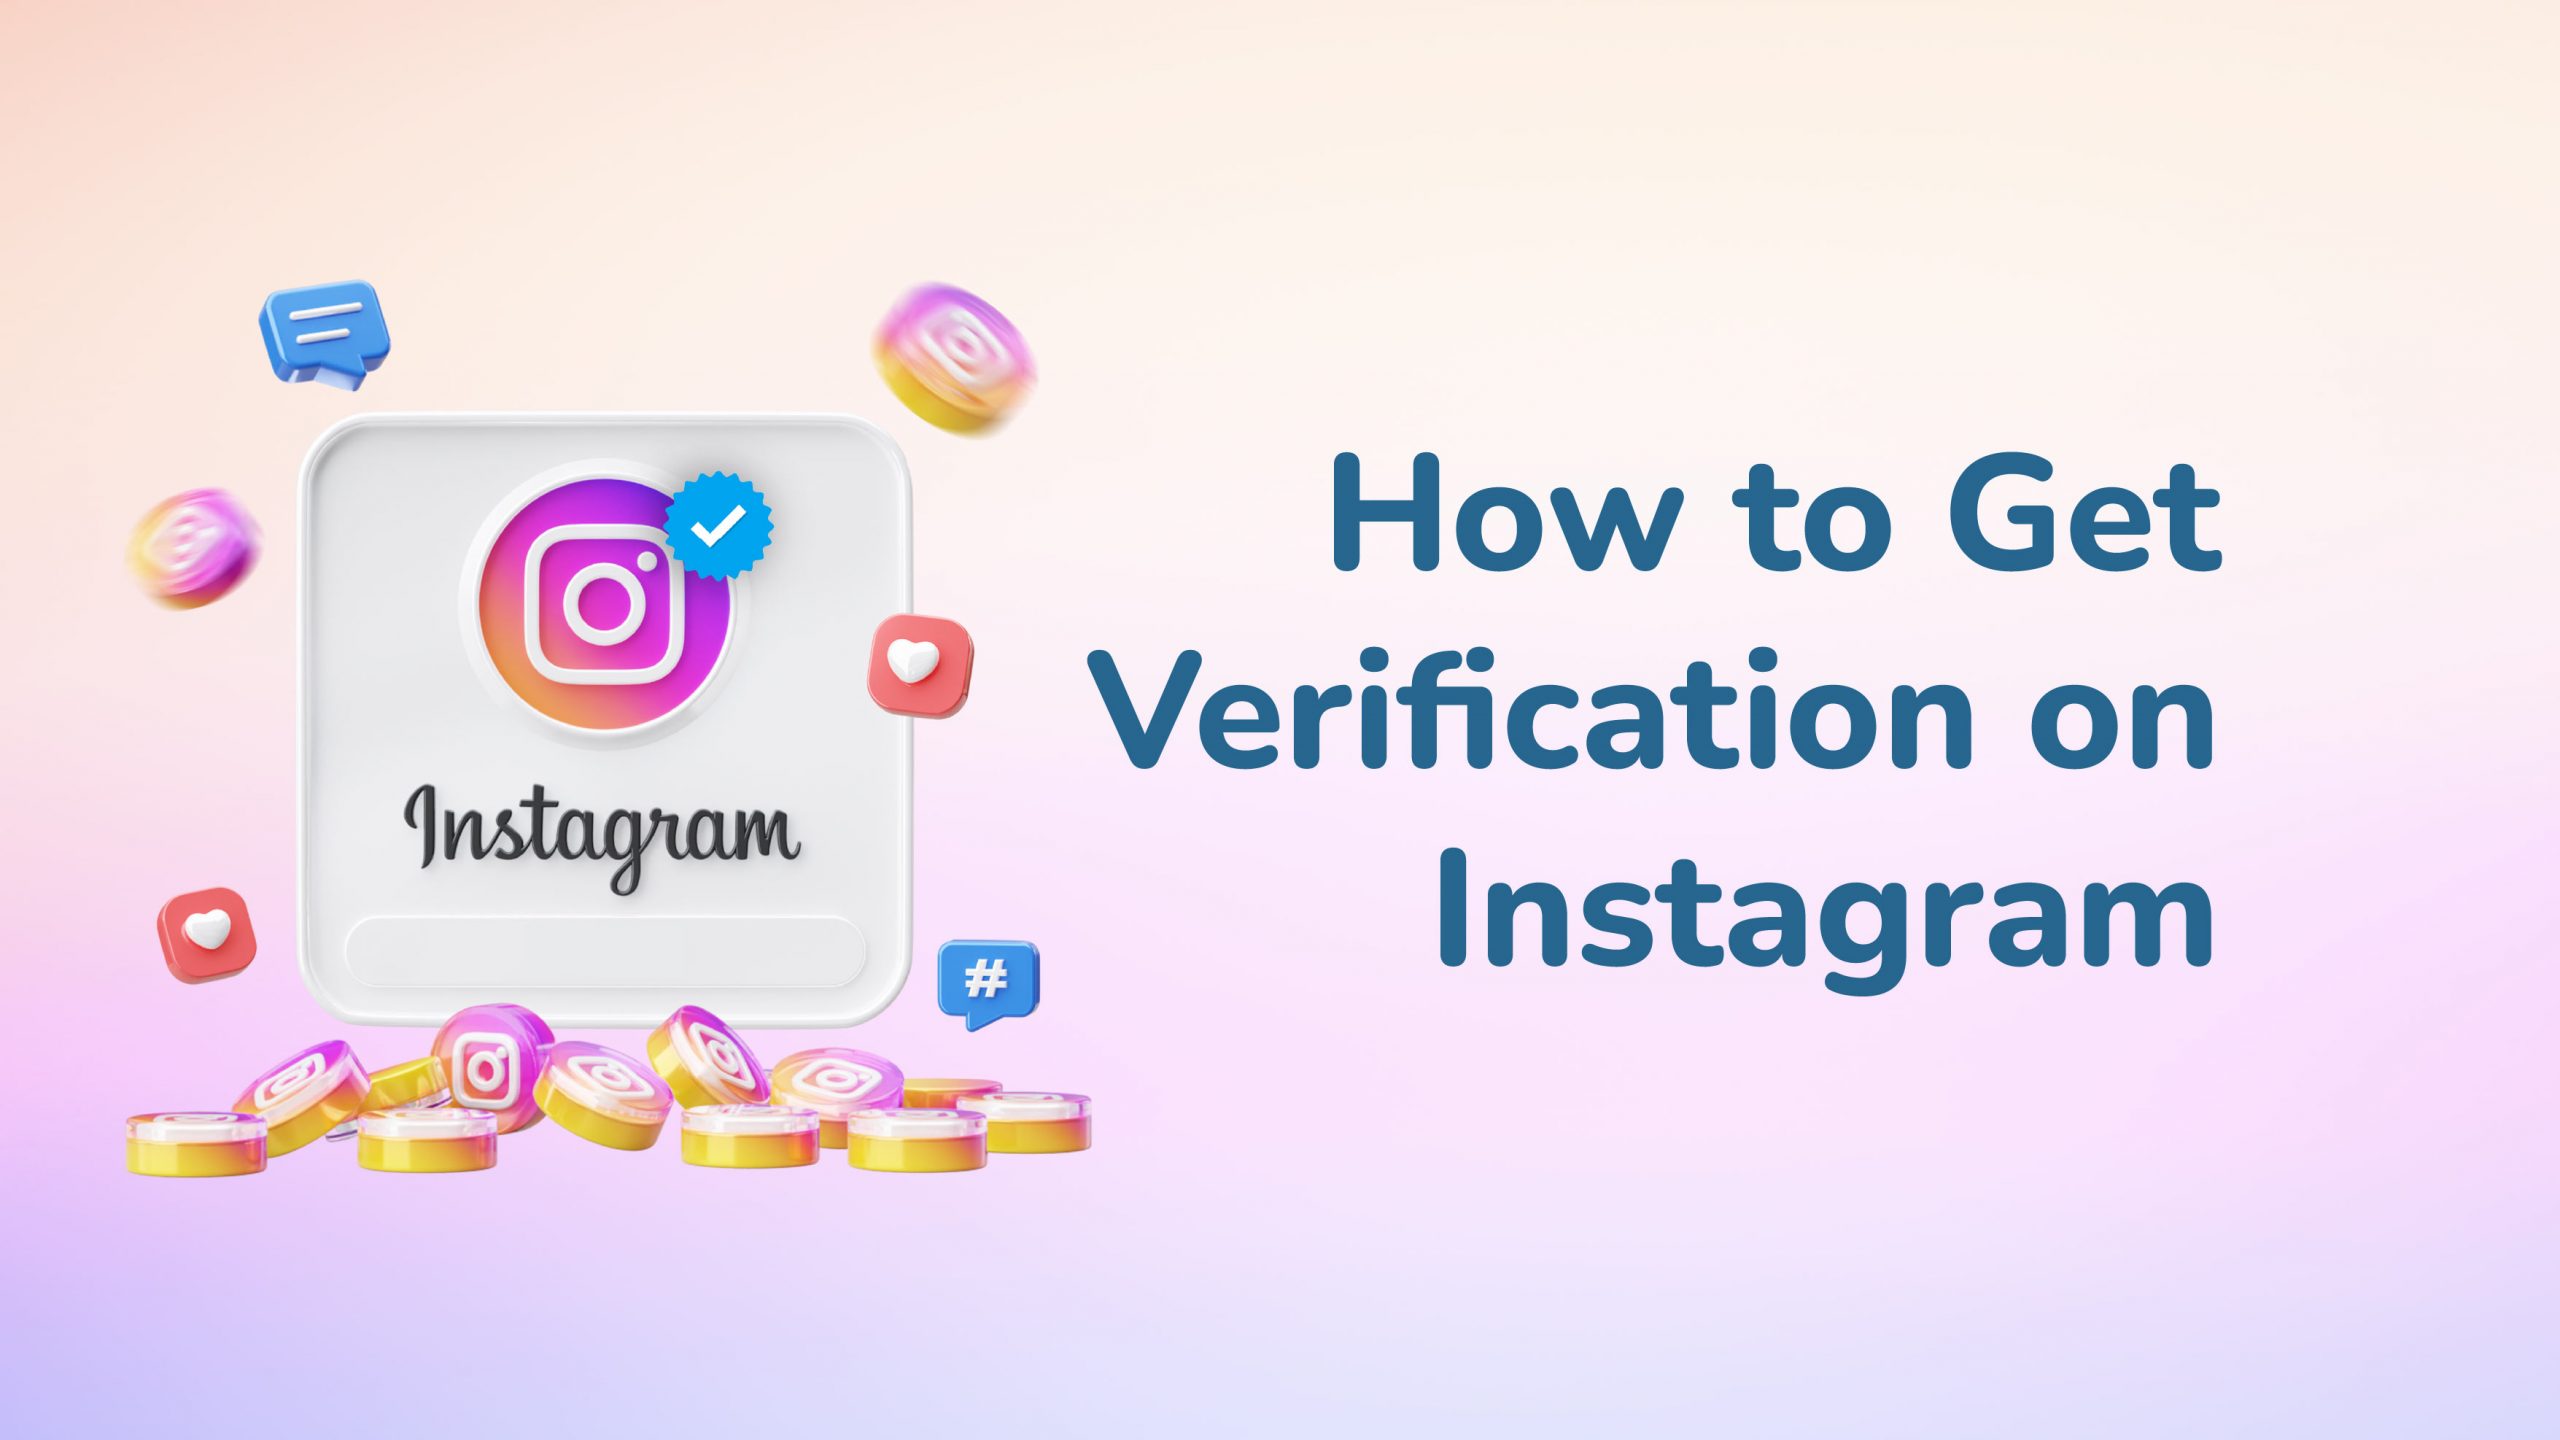 Get Verification on Instagram